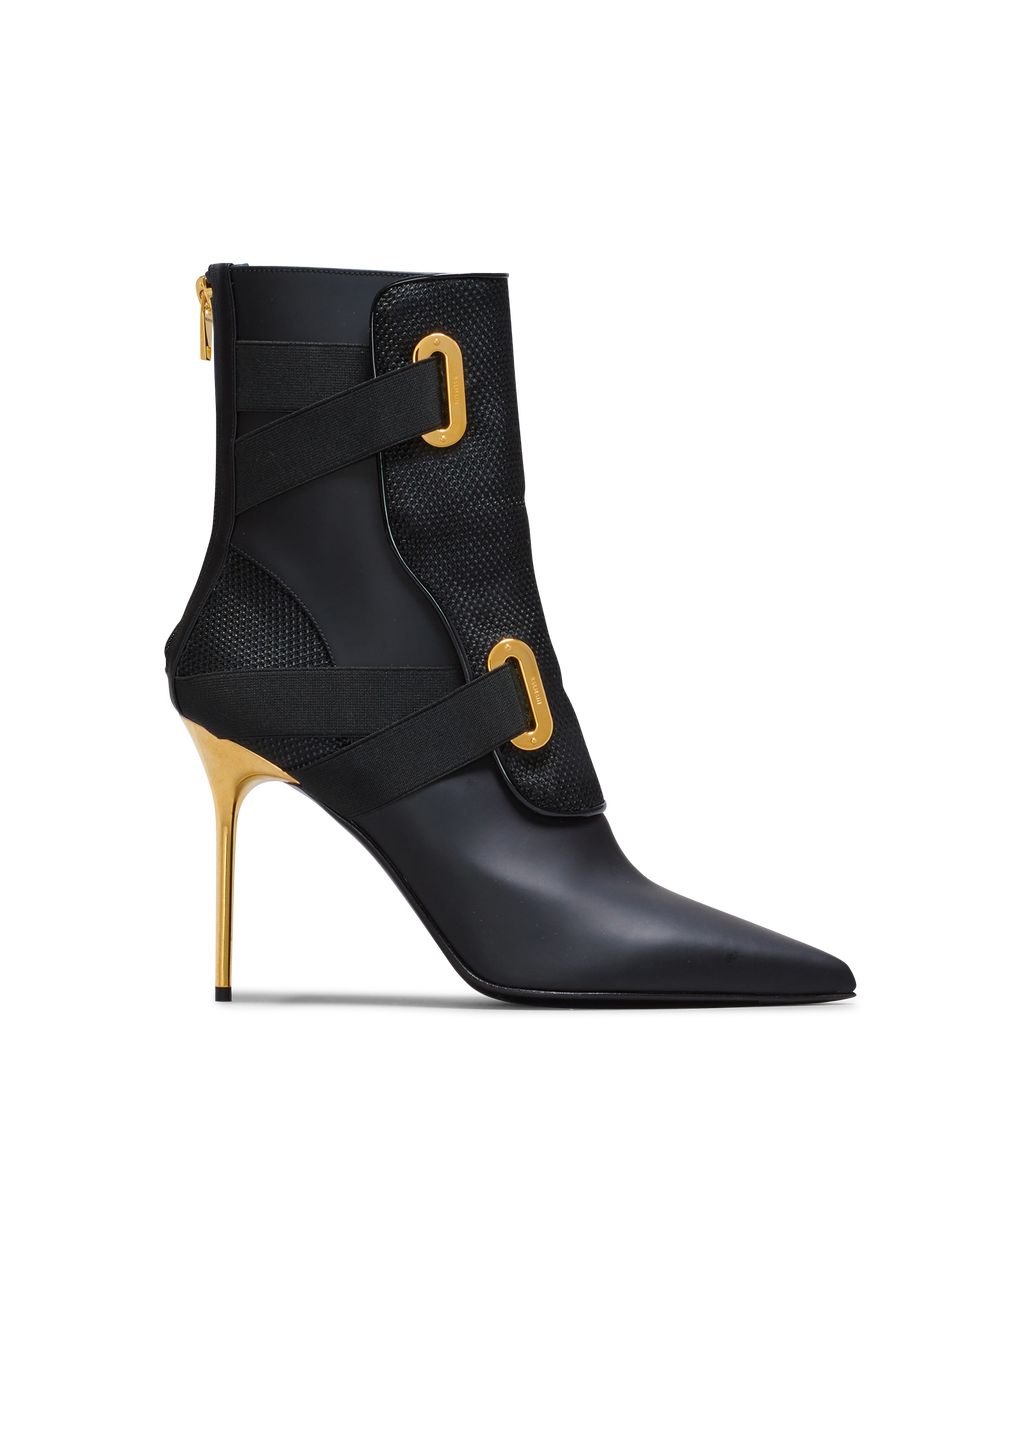 Venus leather ankle boots, black, hi-res